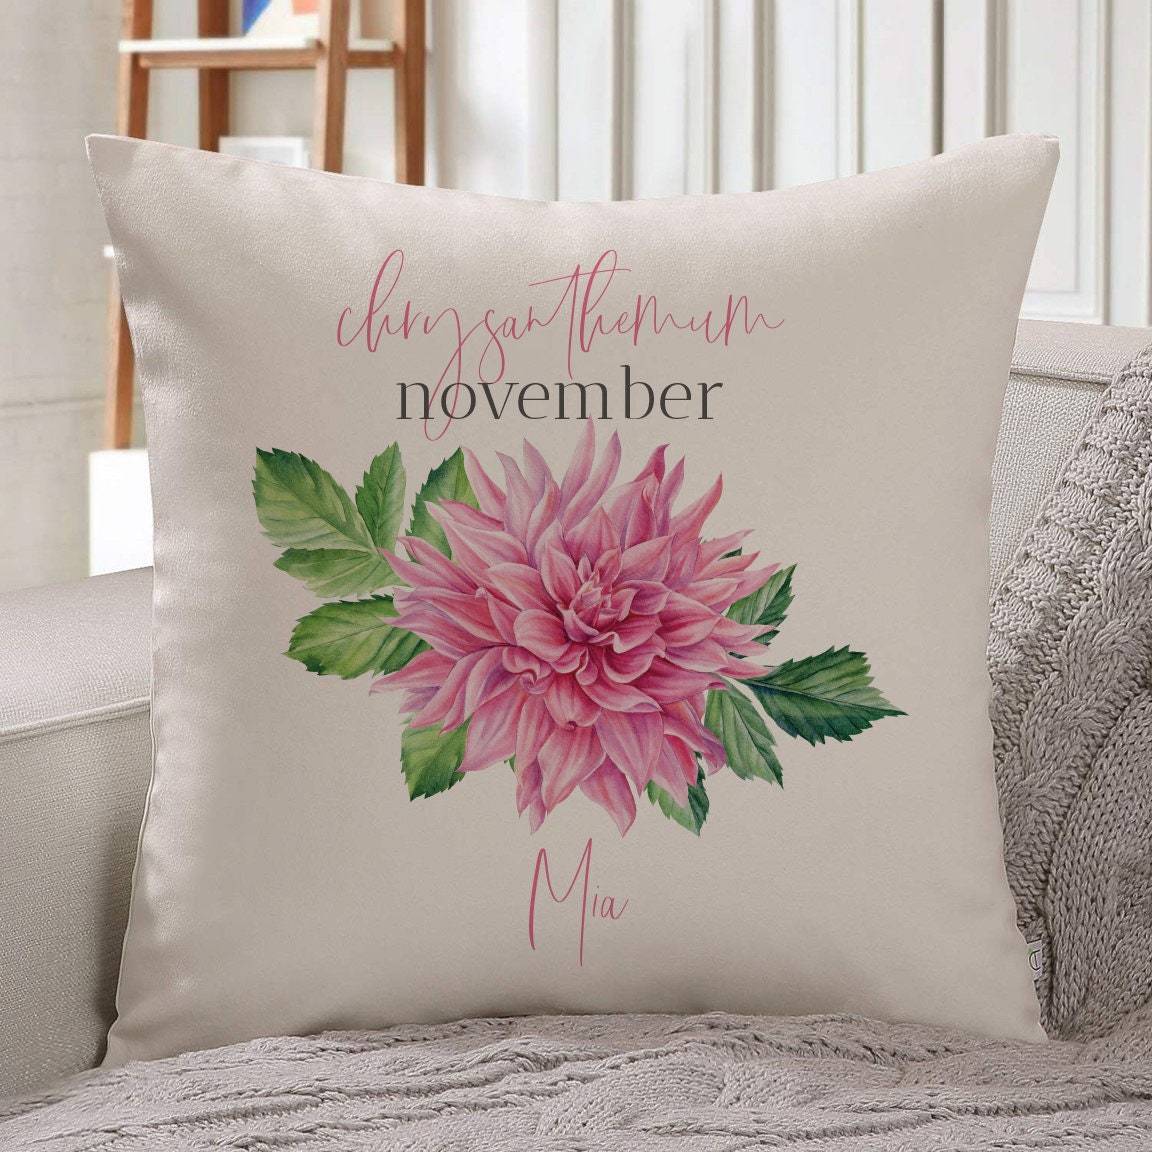 Personalised birth flower cushion, November birth flower chrysanthemum, Floral design